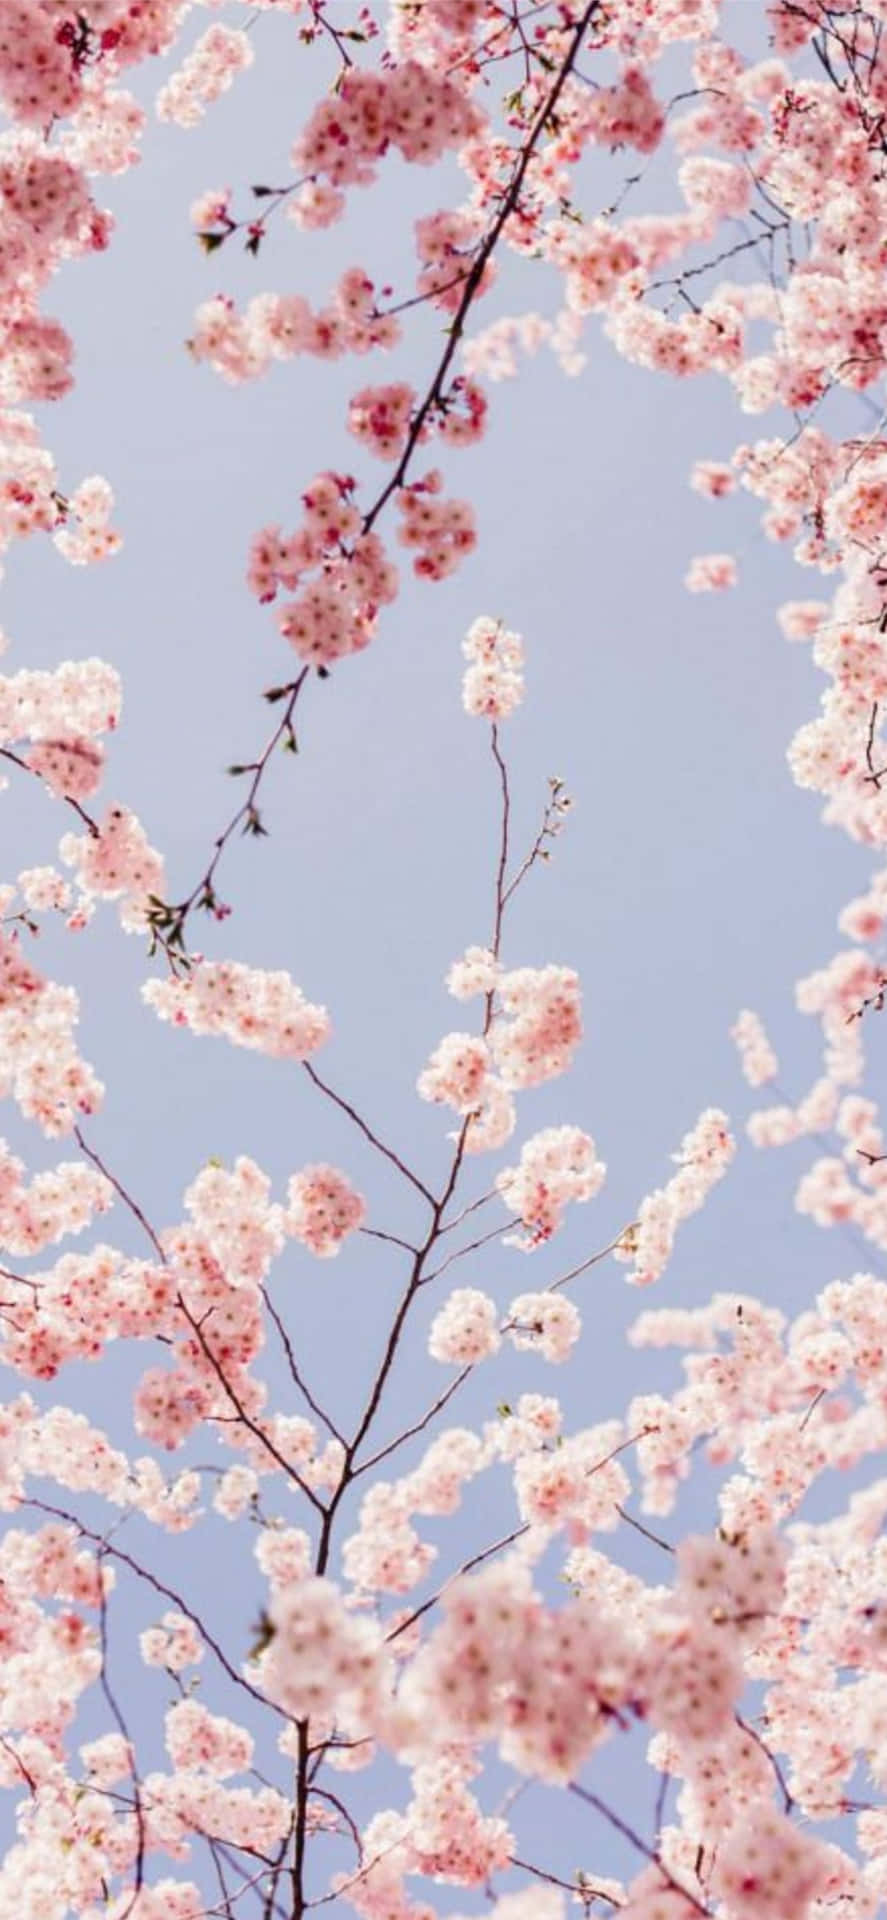 "Beautiful pink sakura blossoms in the sunlight"